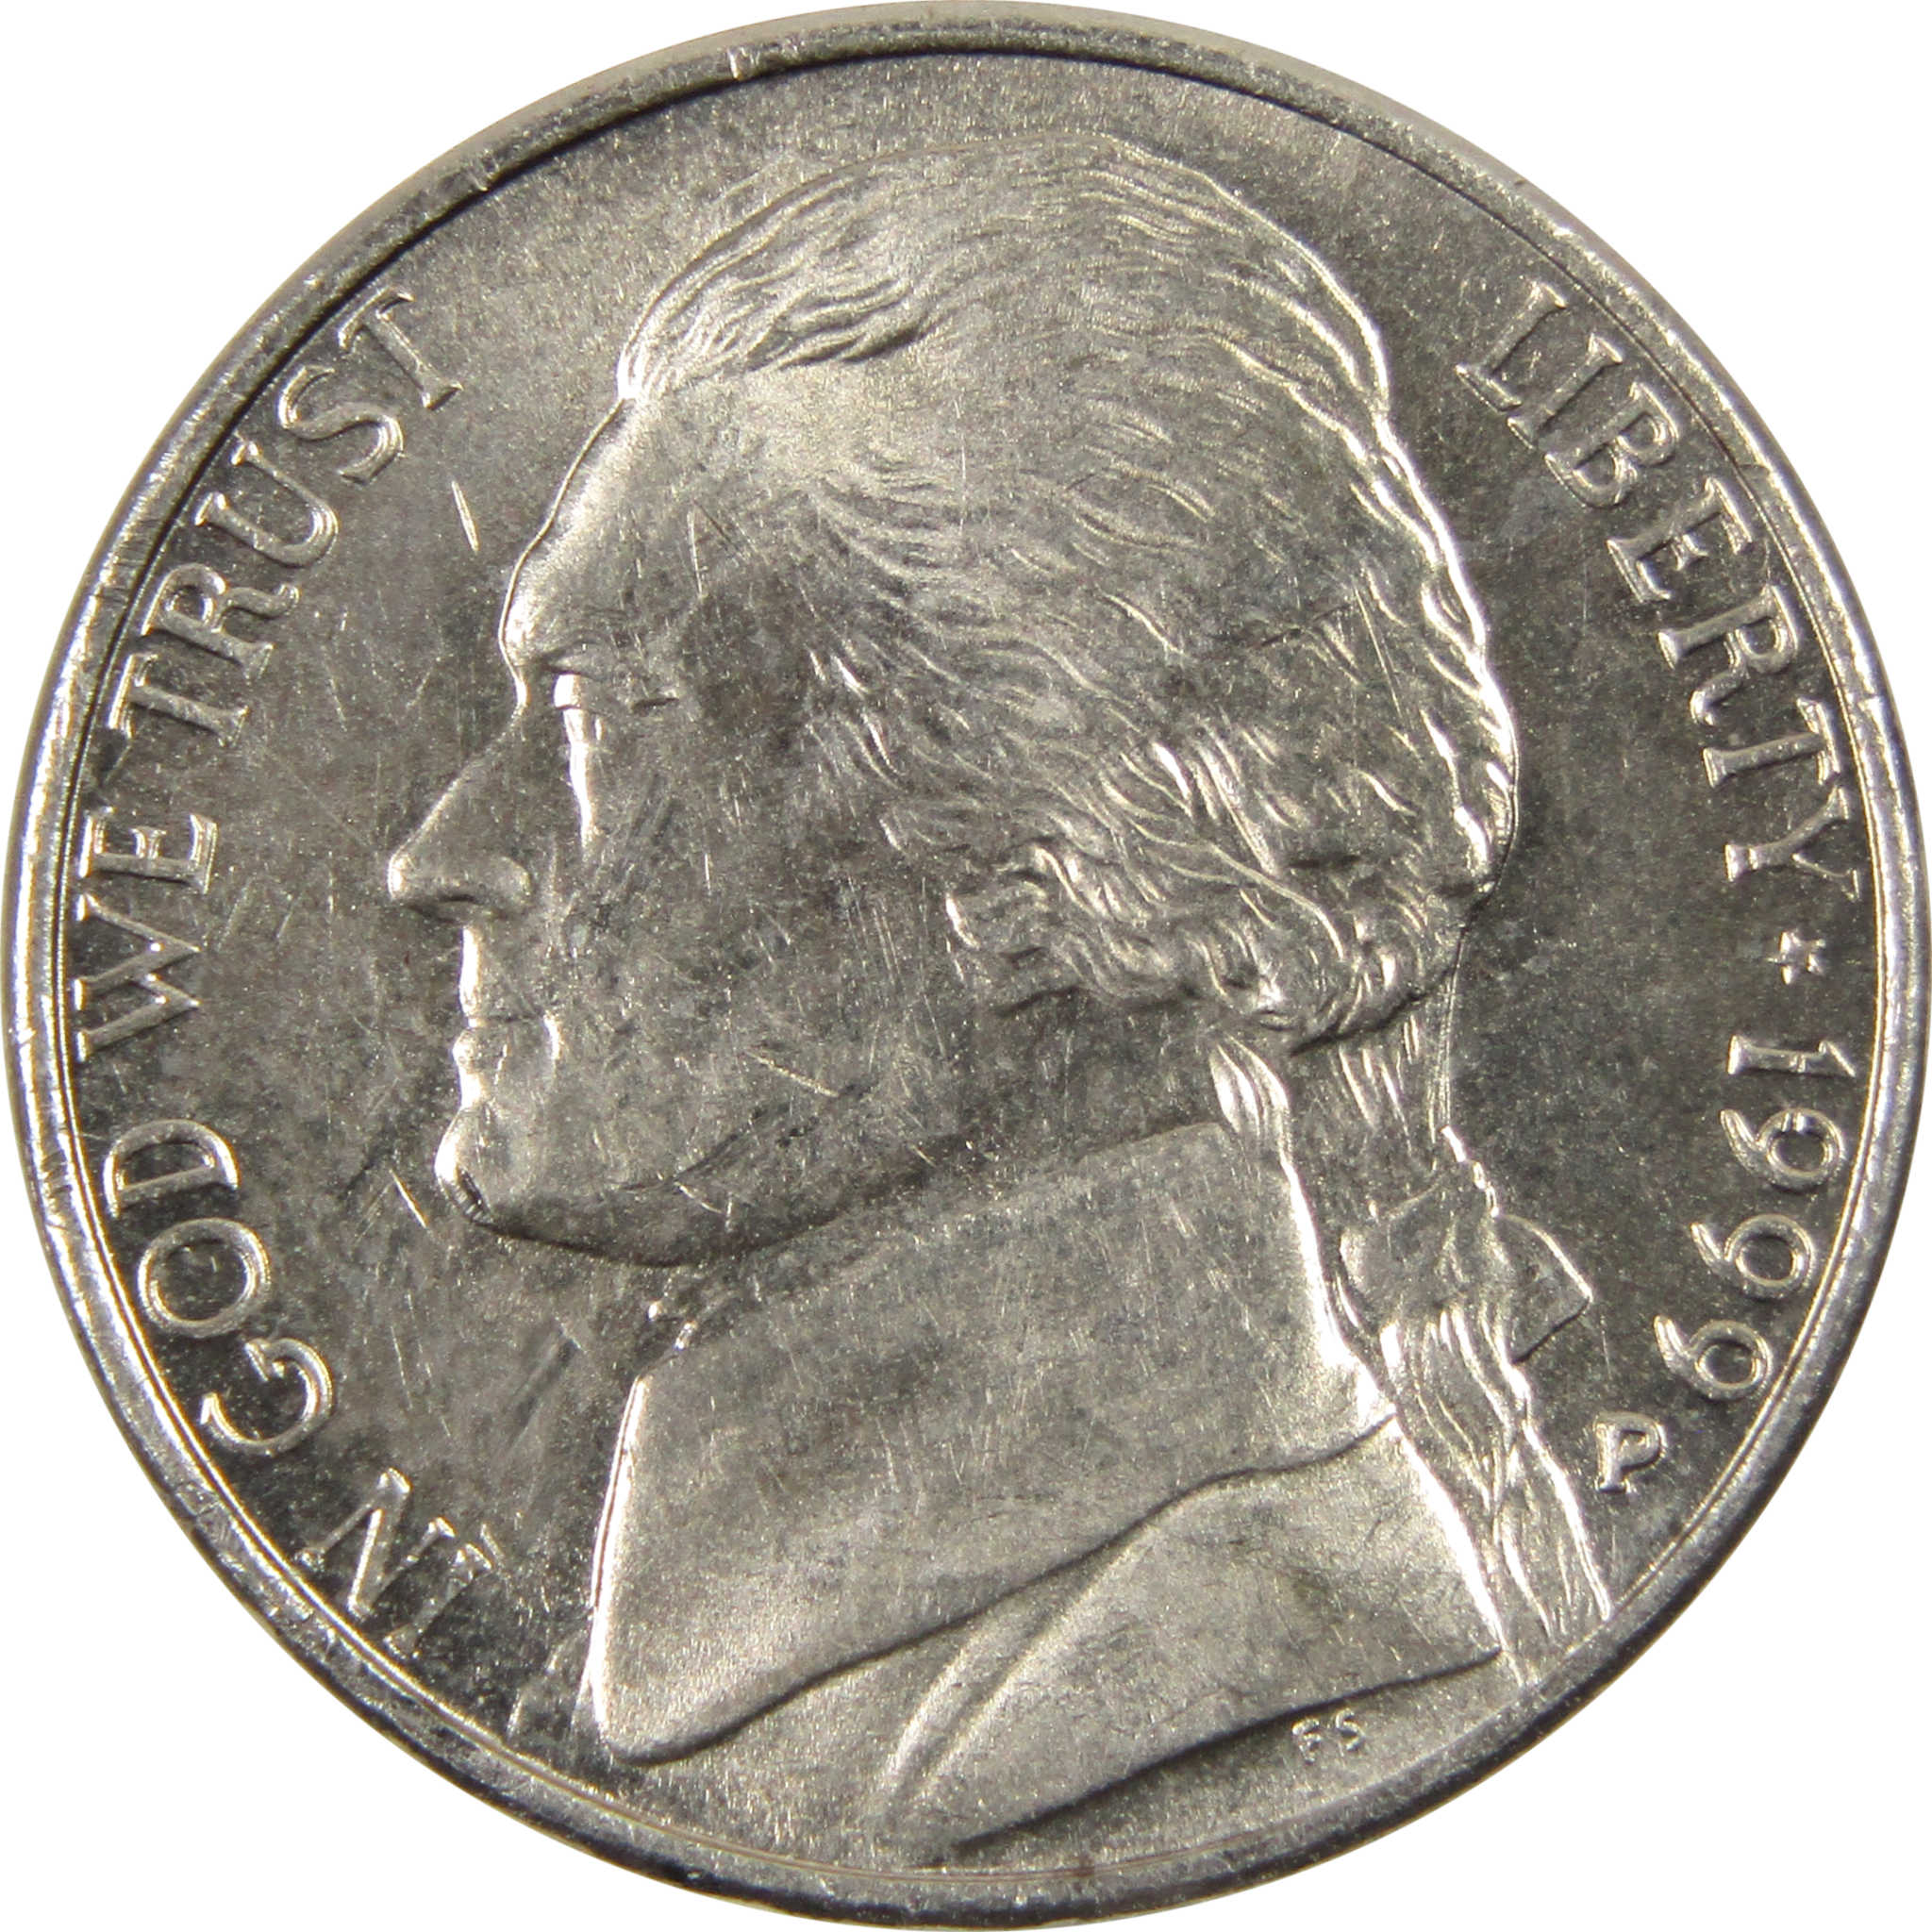 1999 P Jefferson Nickel BU Uncirculated 5c Coin